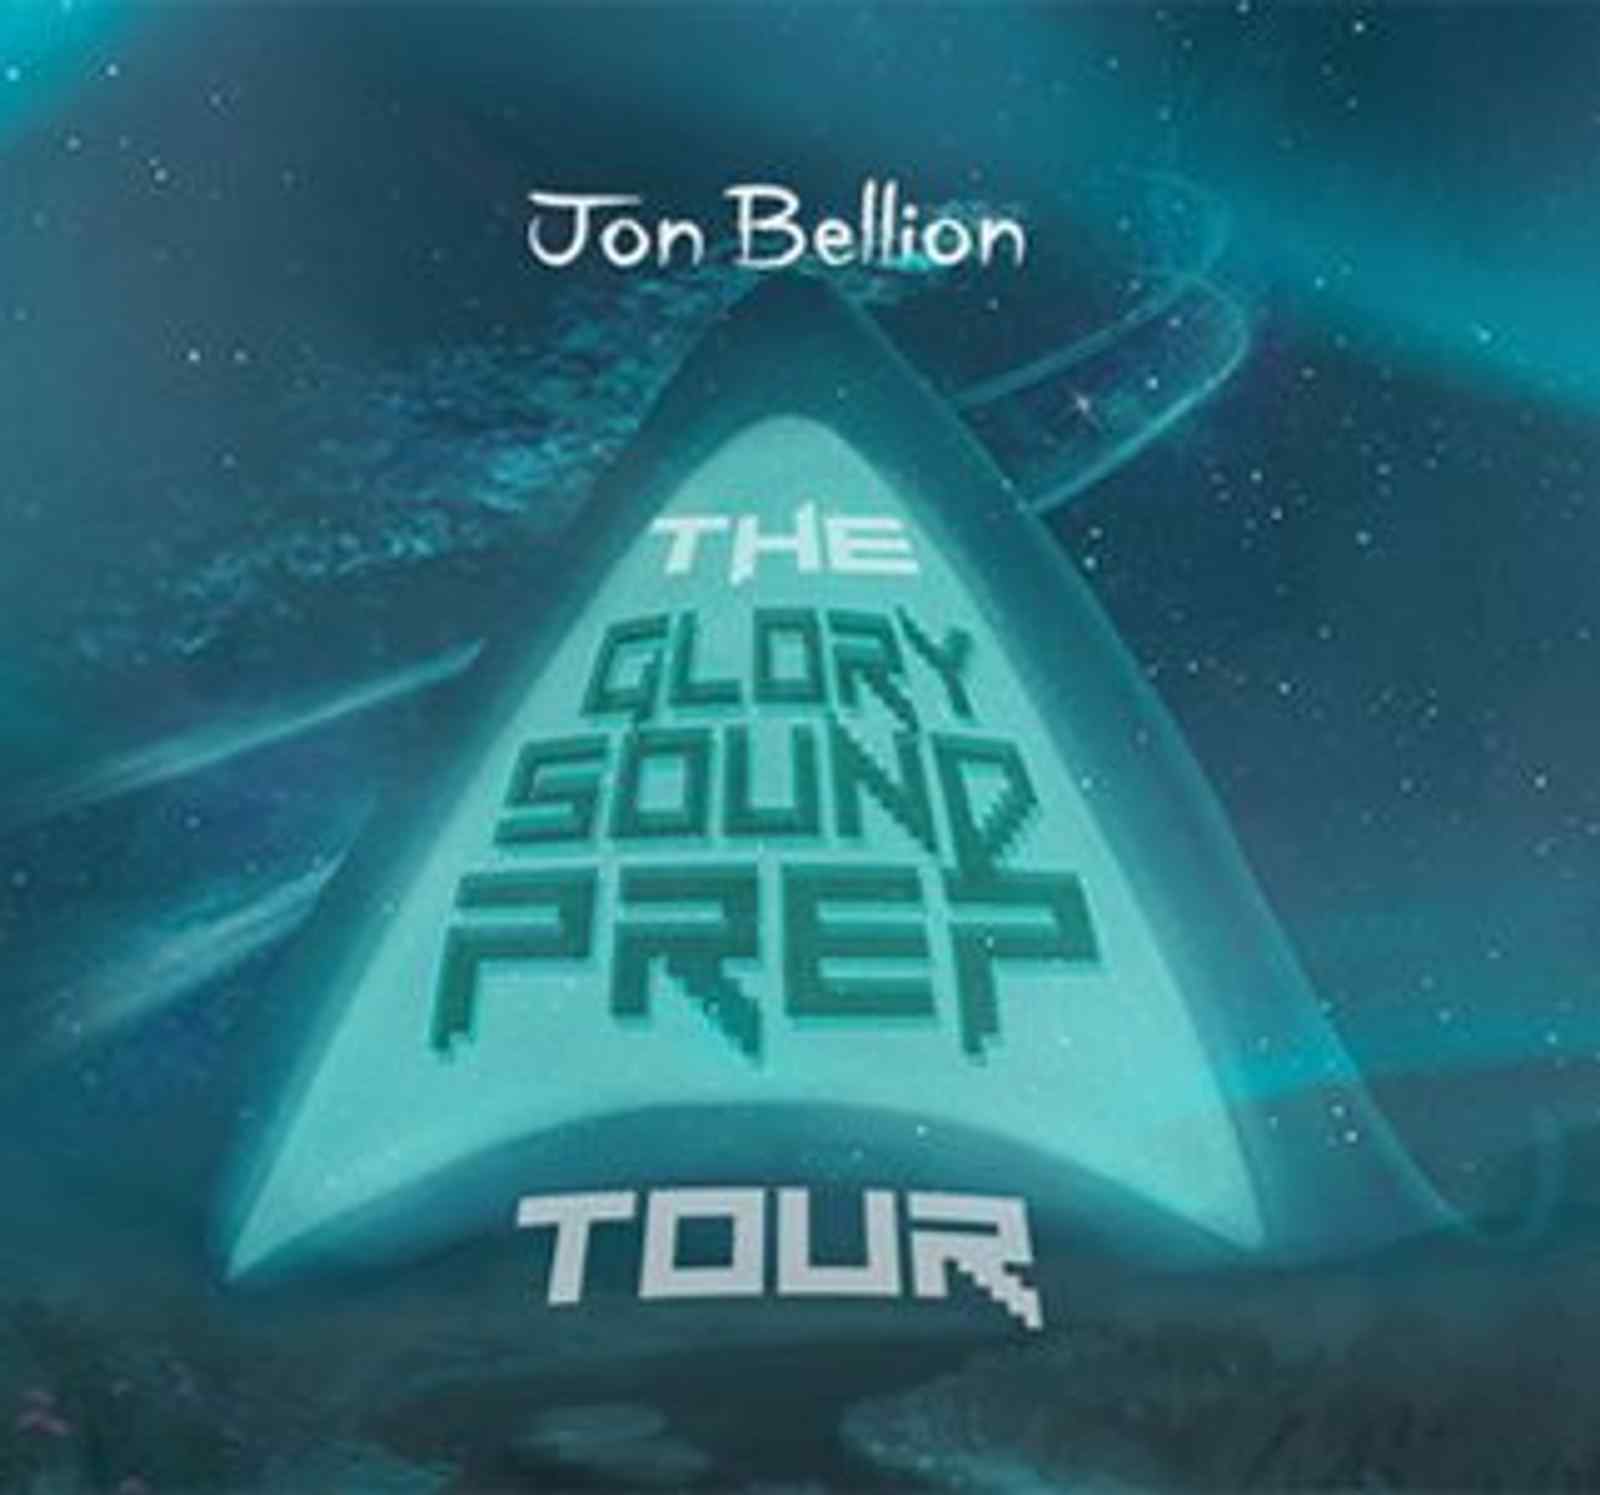 JON BELLION ANNOUNCES 2019 NORTH AMERICAN HEADLINE TOUR